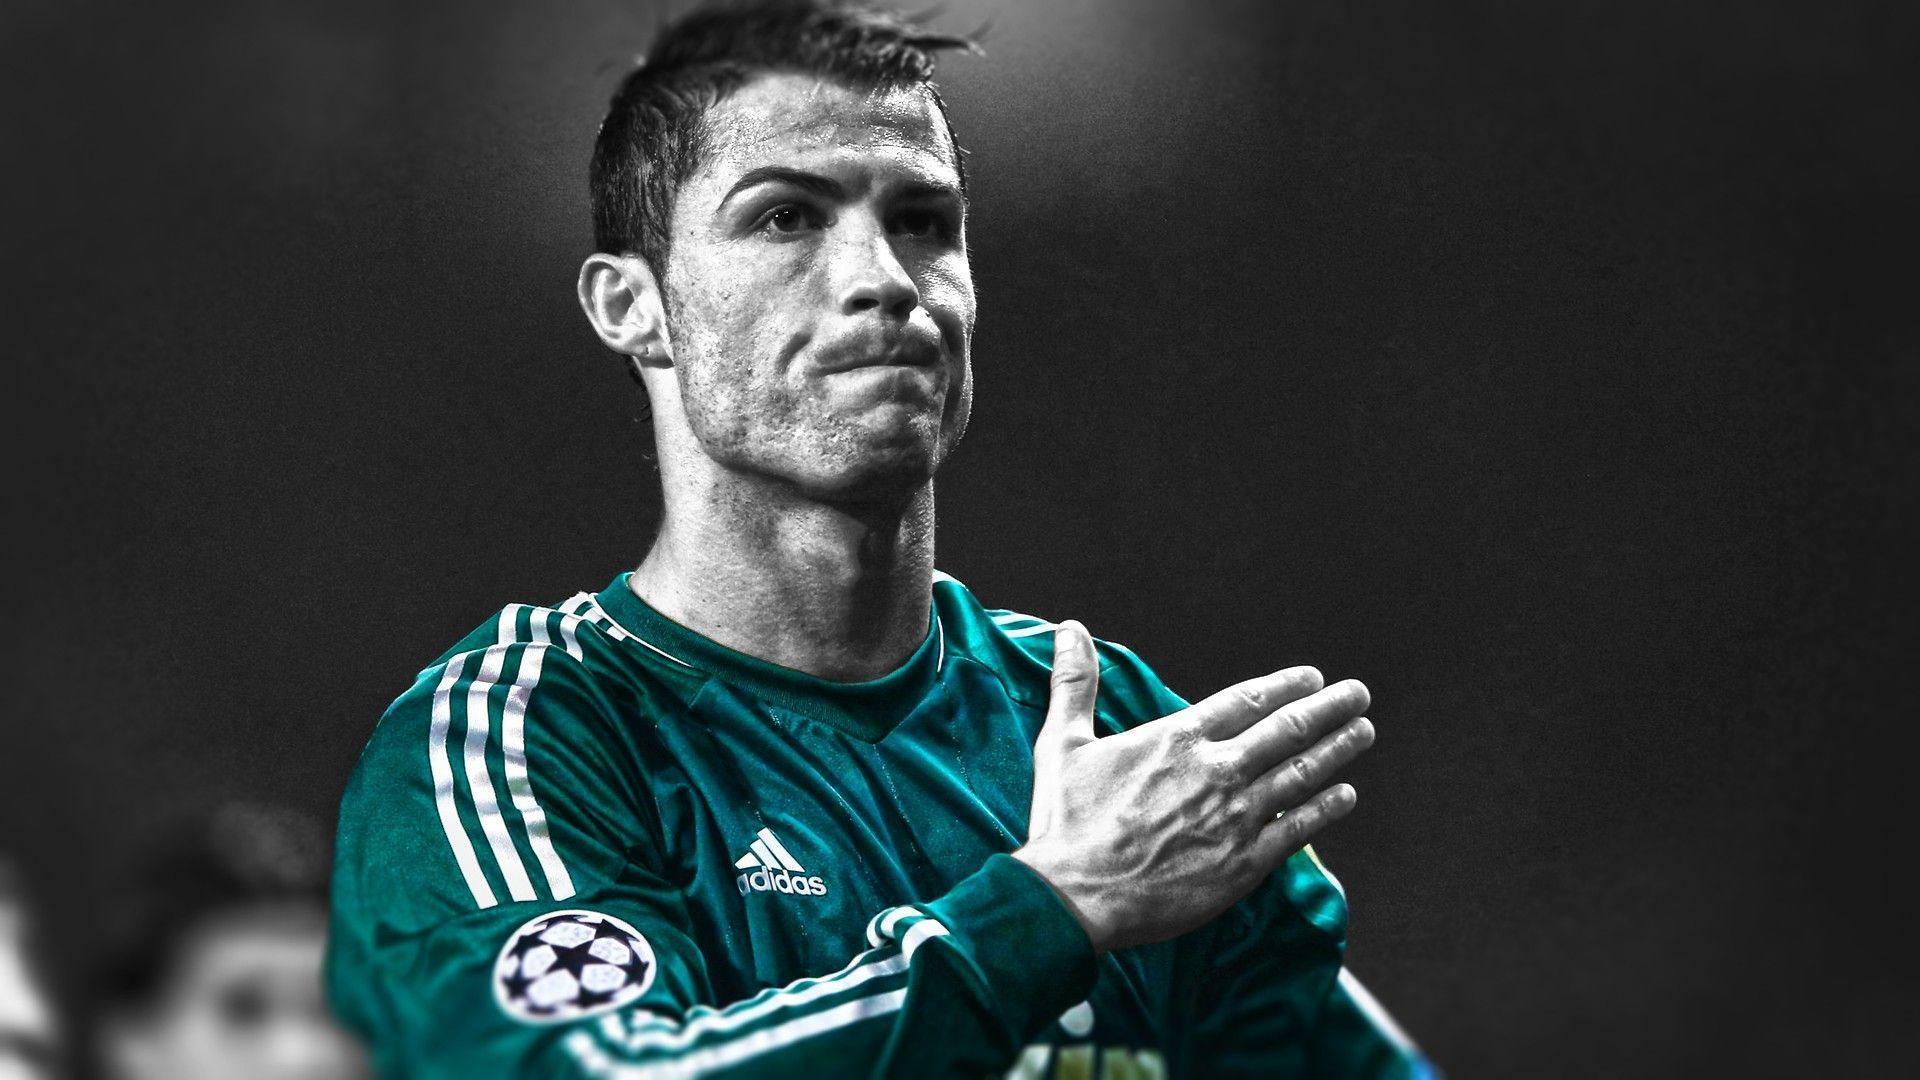 Cristiano Ronaldo Hd Wallpapers Top Free Cristiano Ronaldo